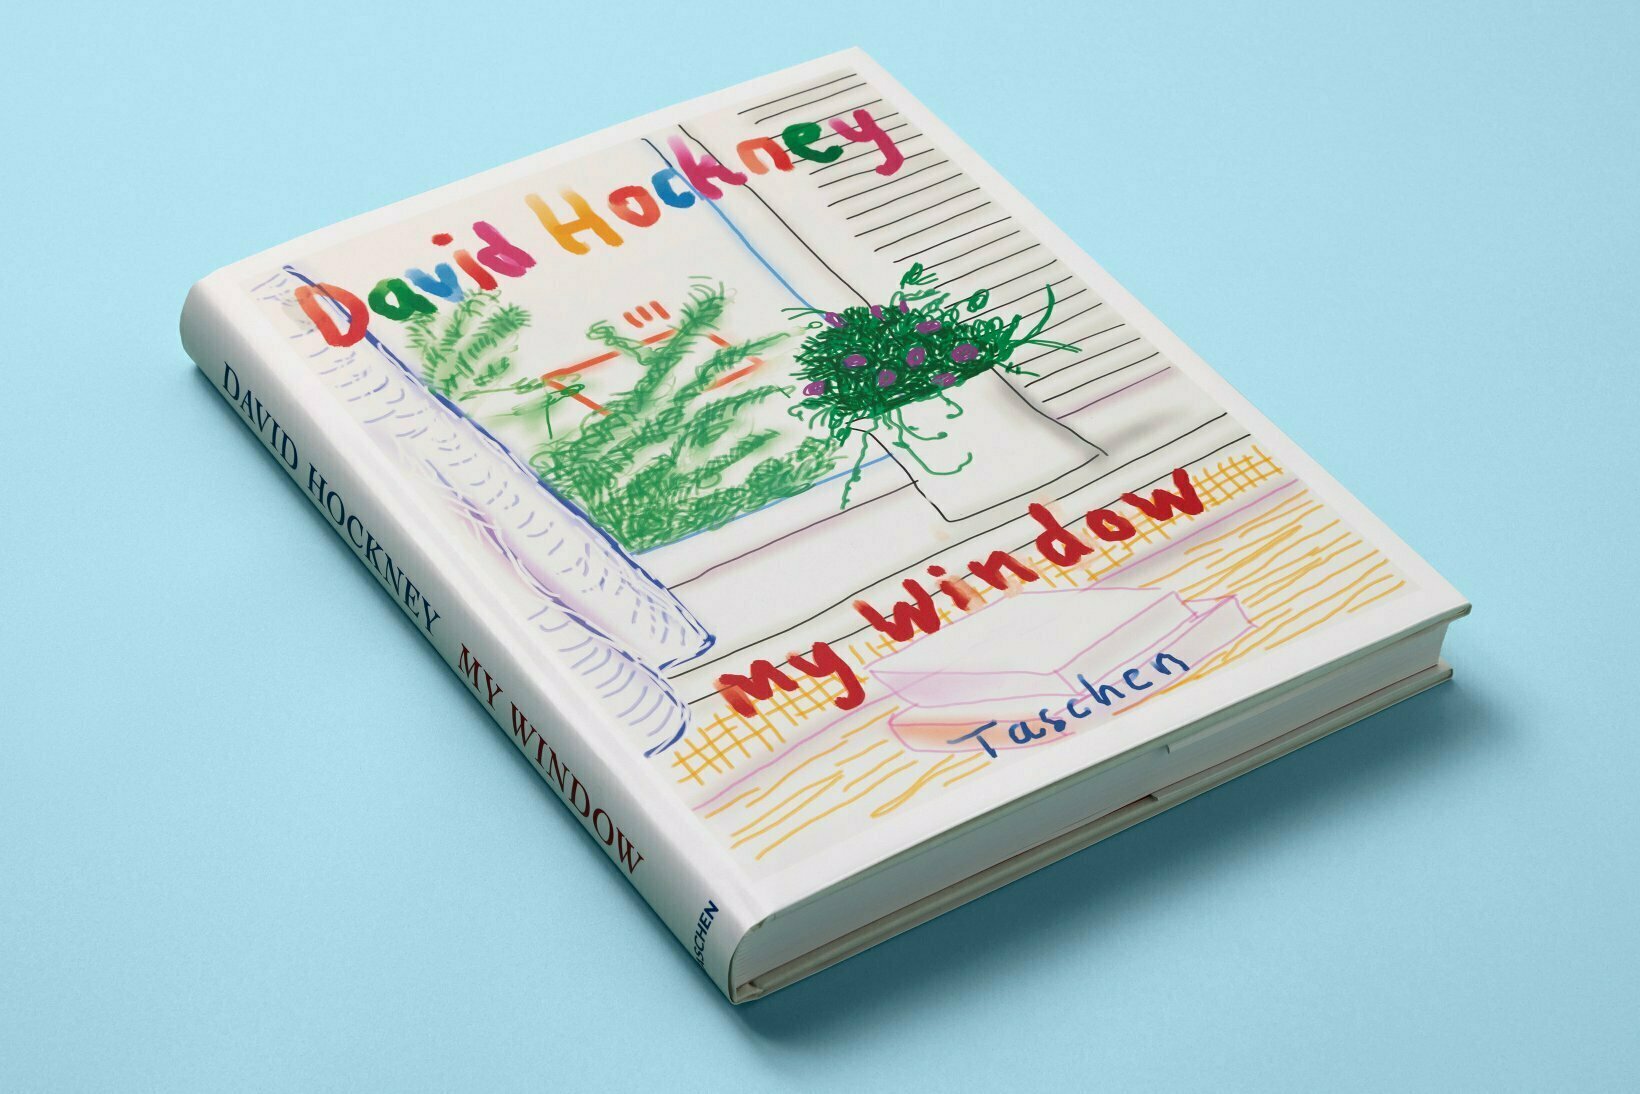 David Hockney. My Window | XL-Ausgabe